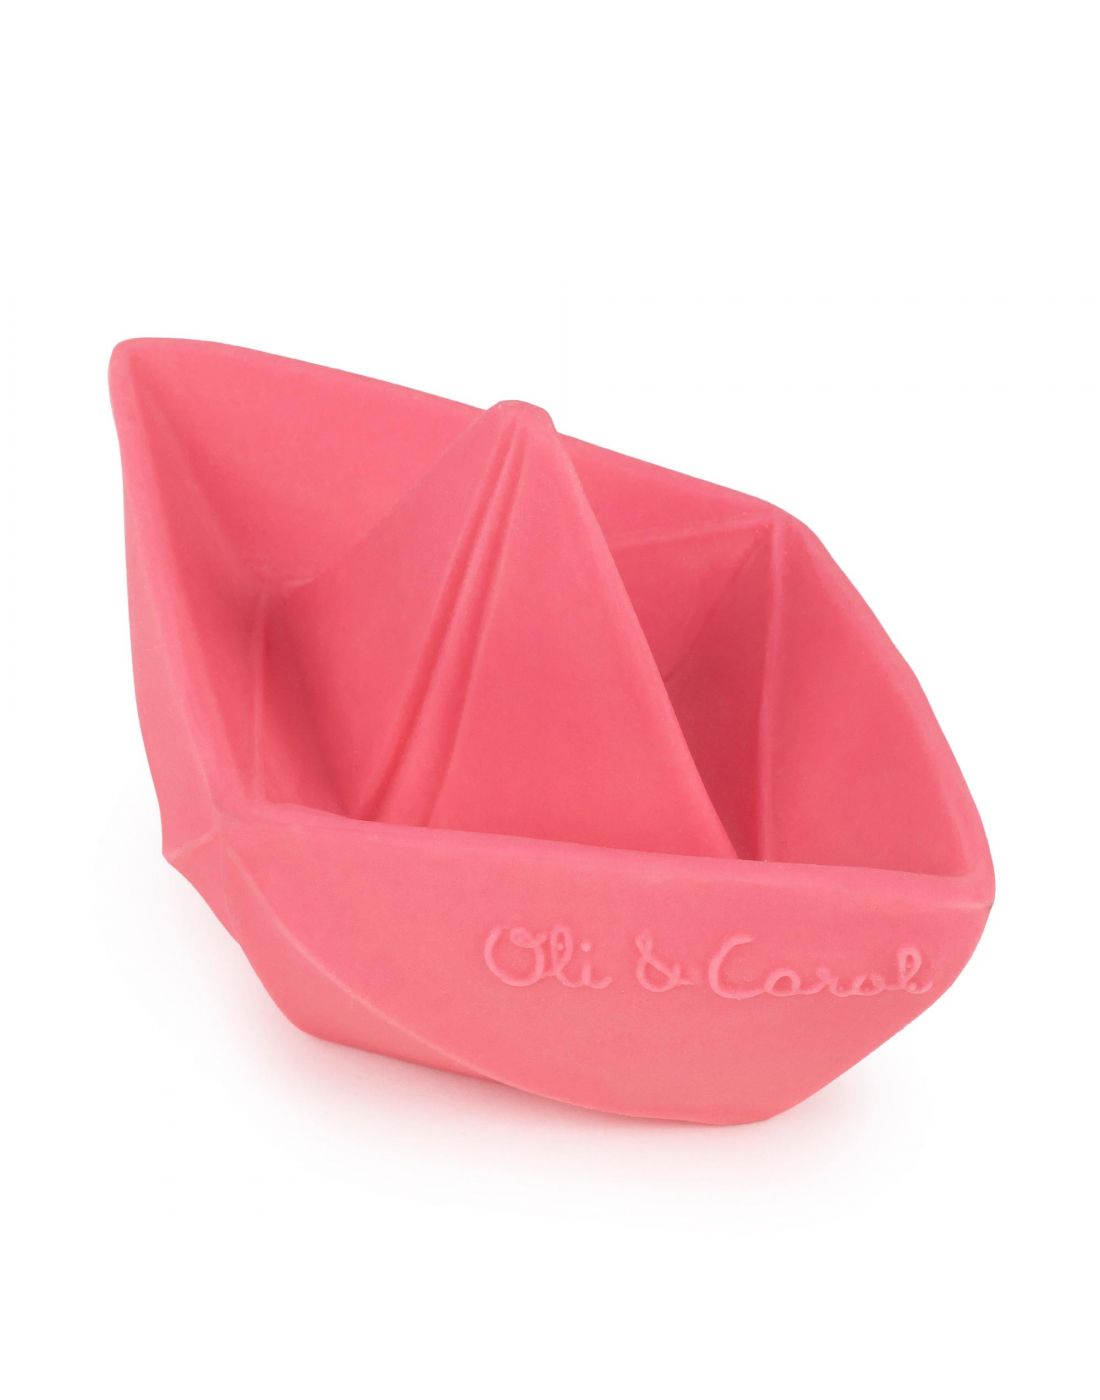 Oli&Carol Origami Boat